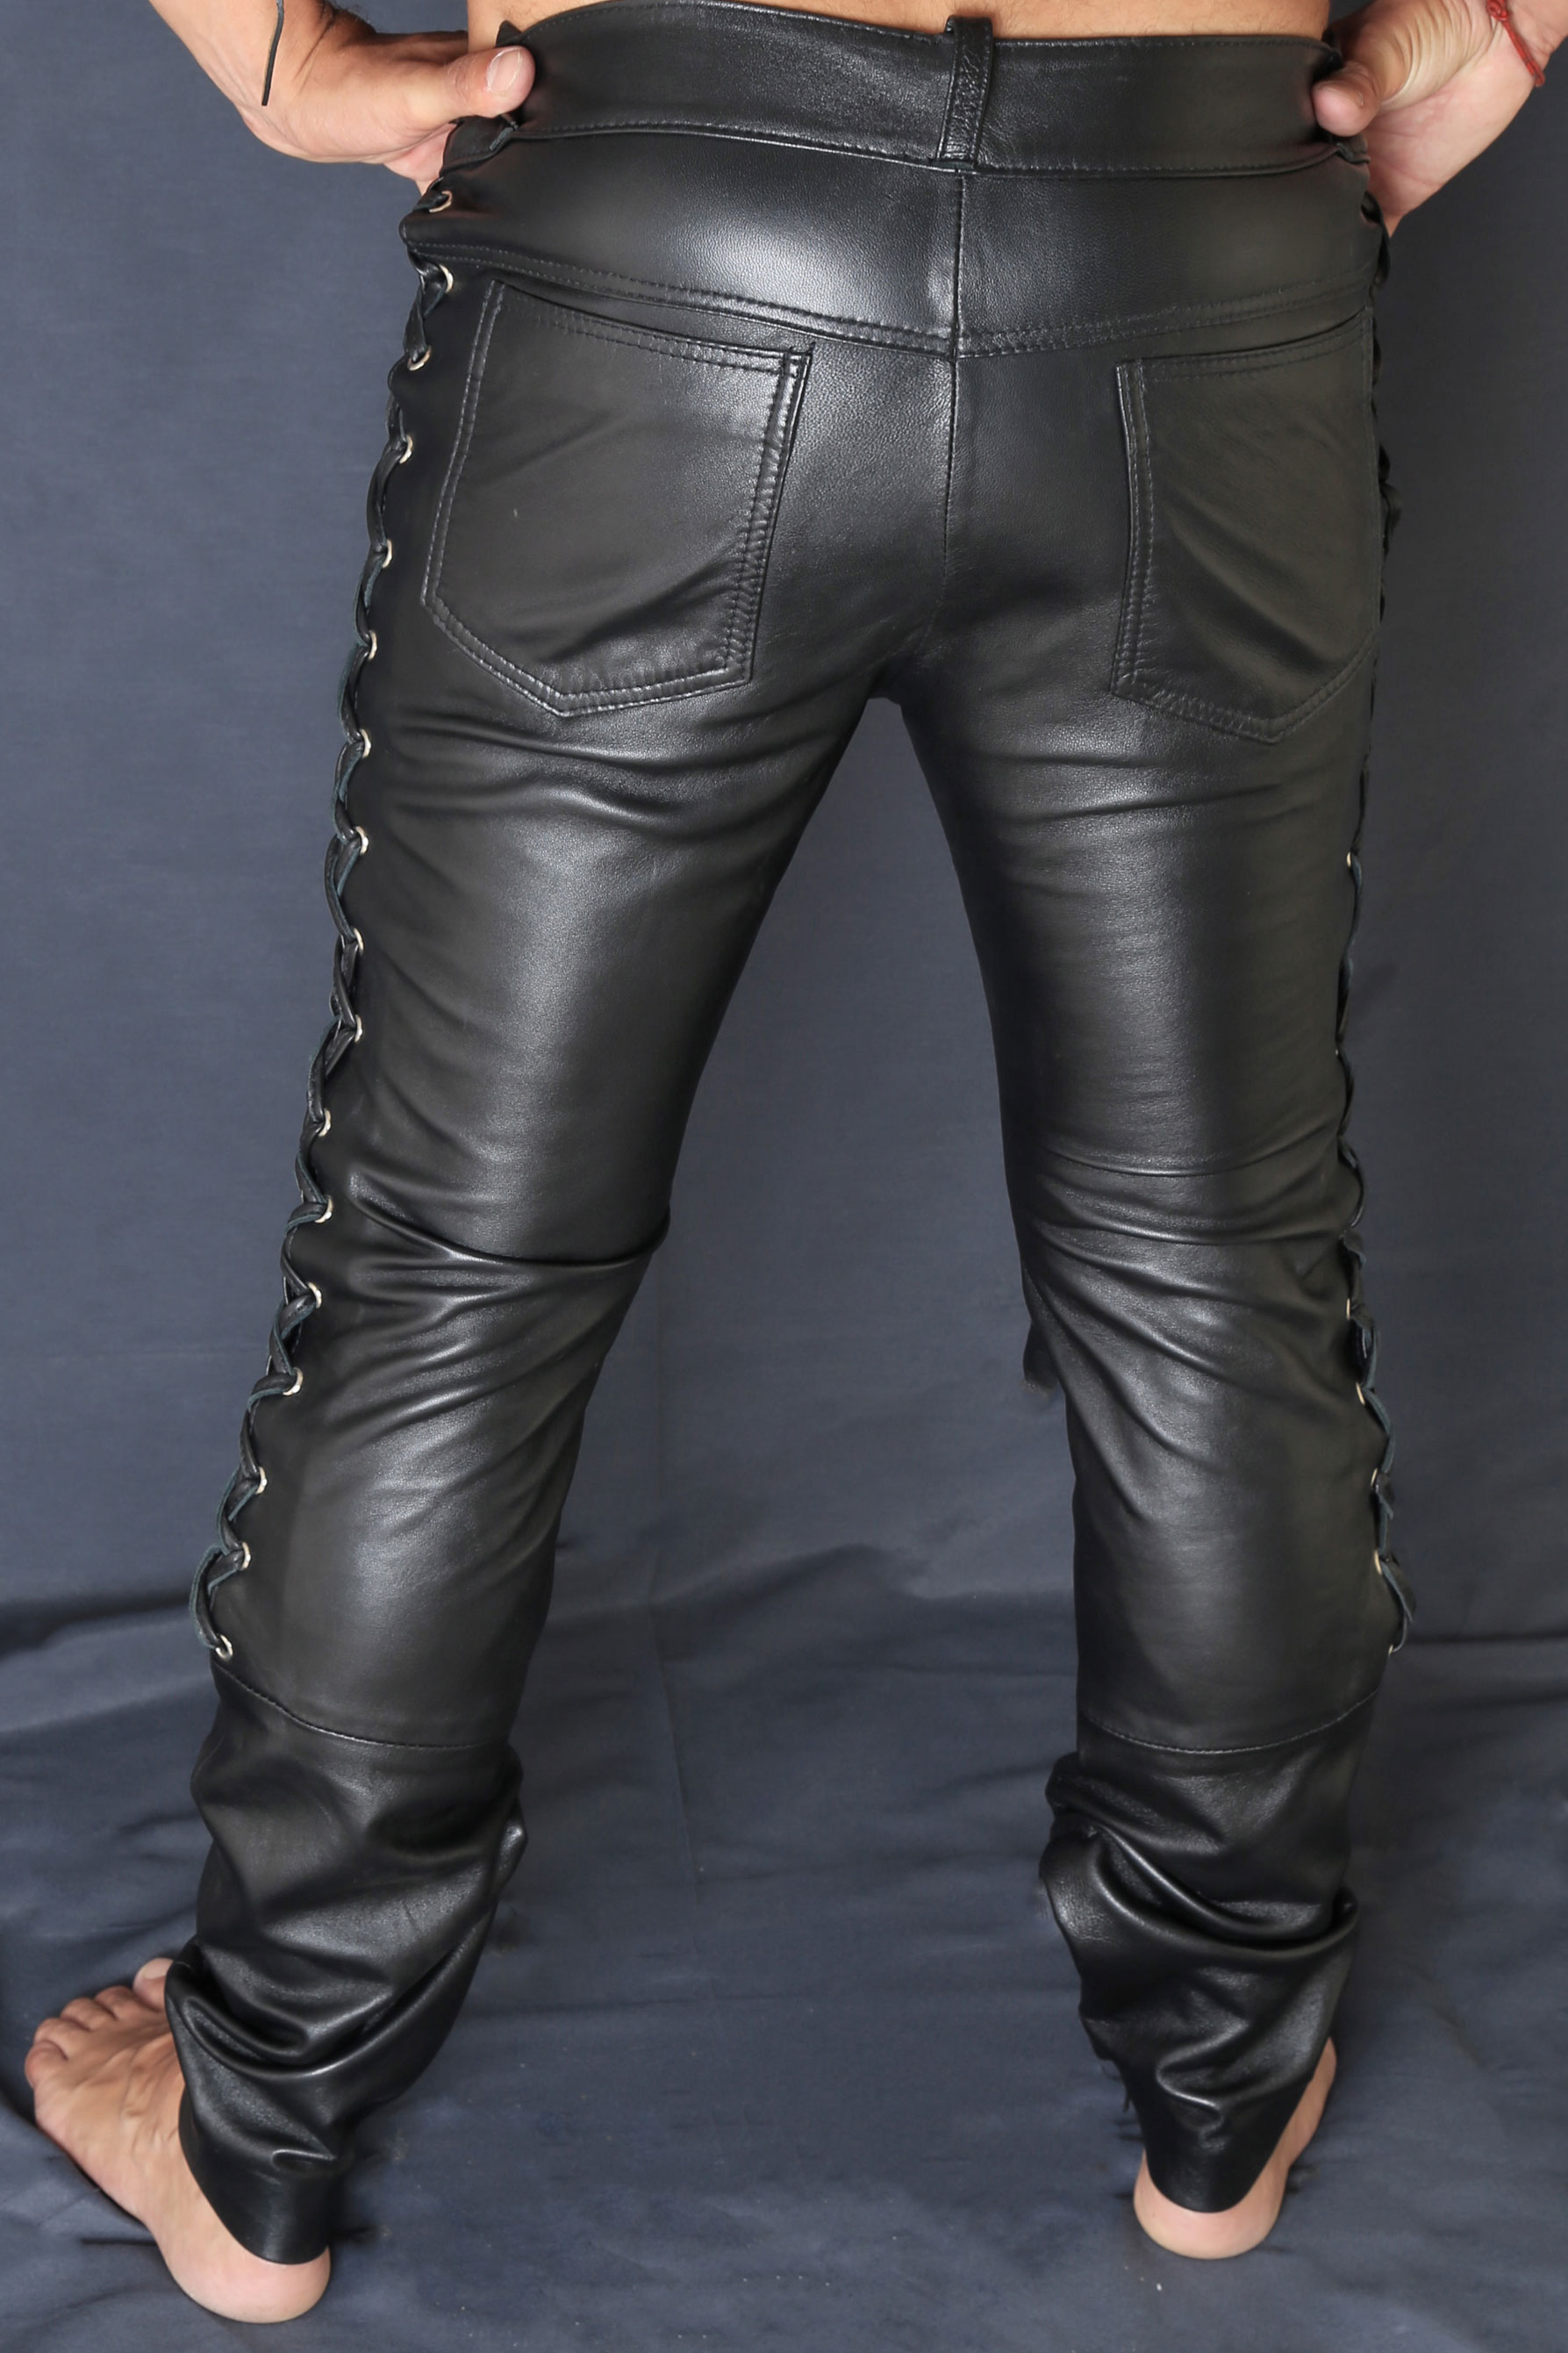 Leather Pants Fetish